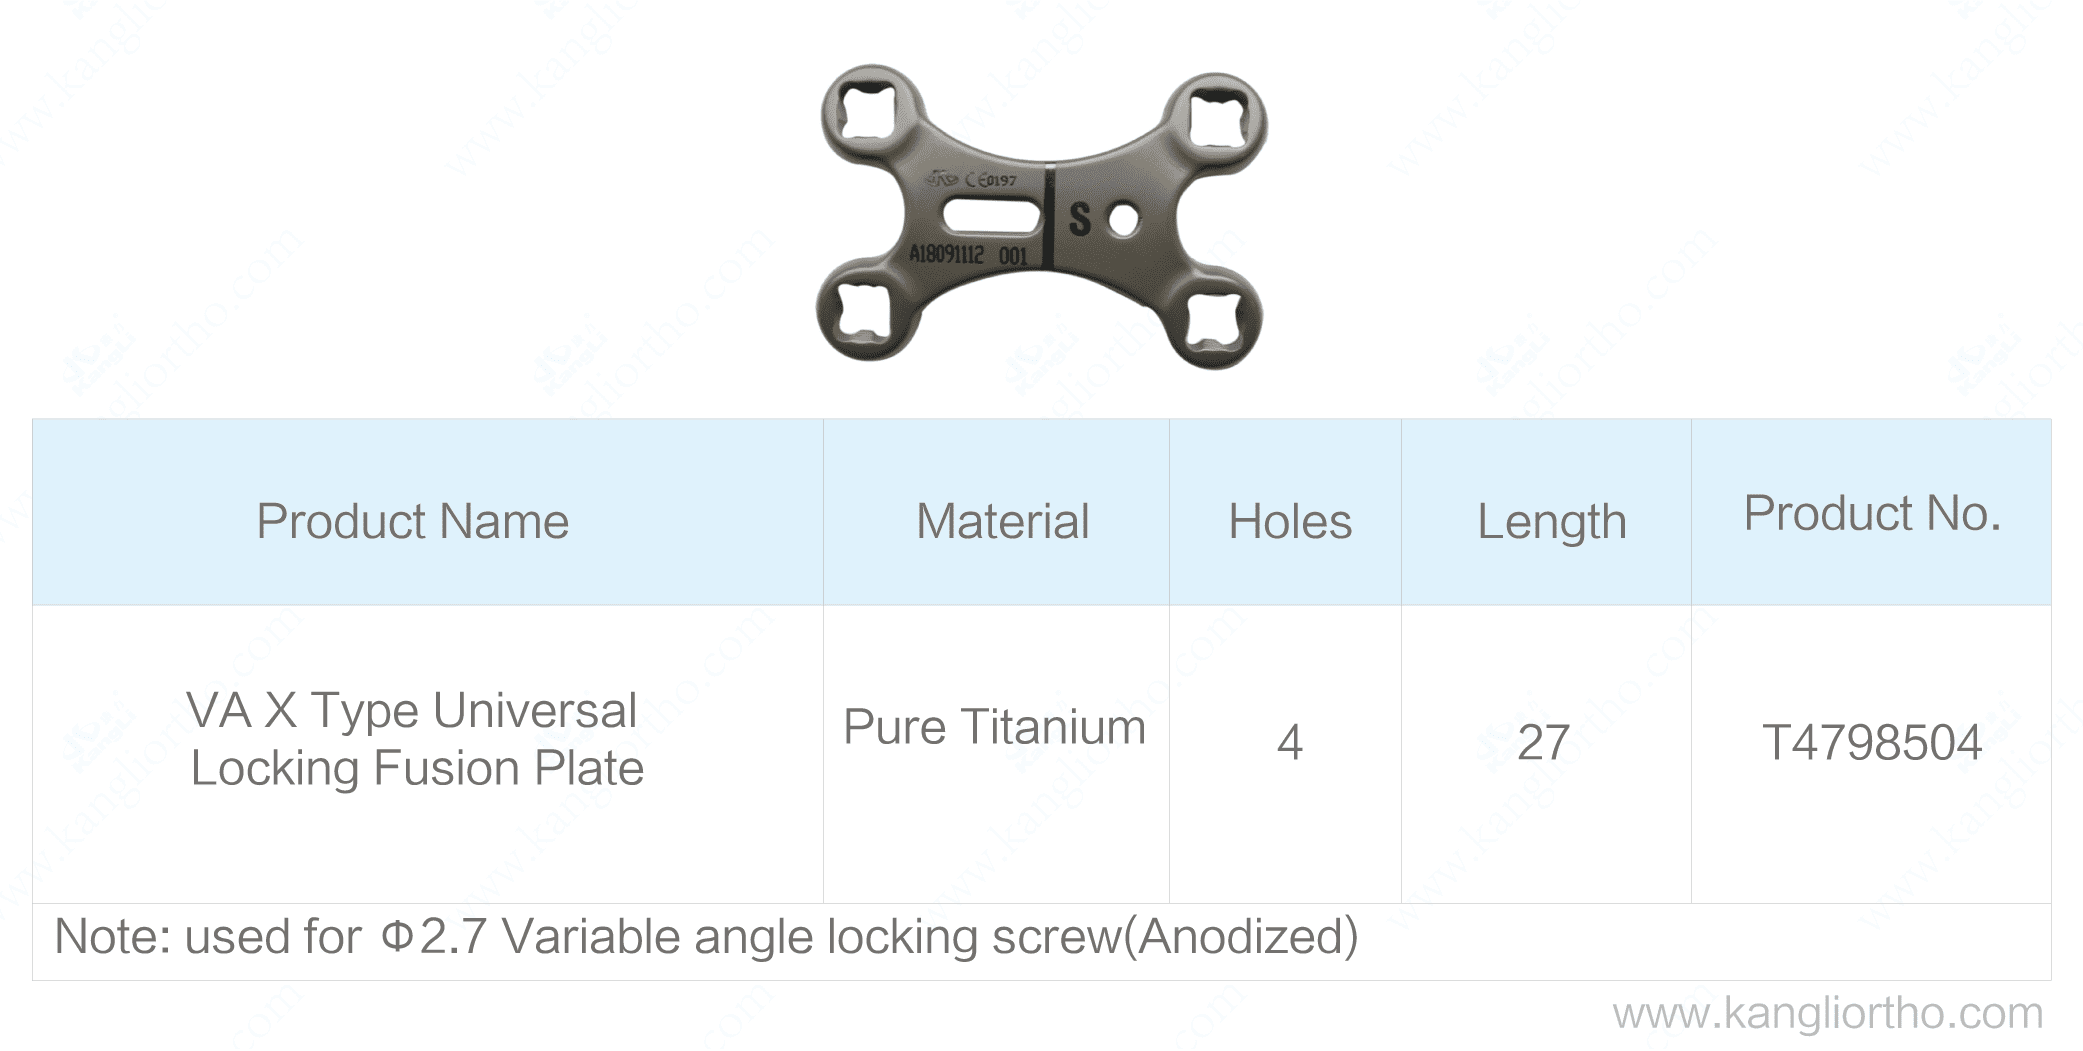 va-x-type-universal-locking-fusion-plate-specifications